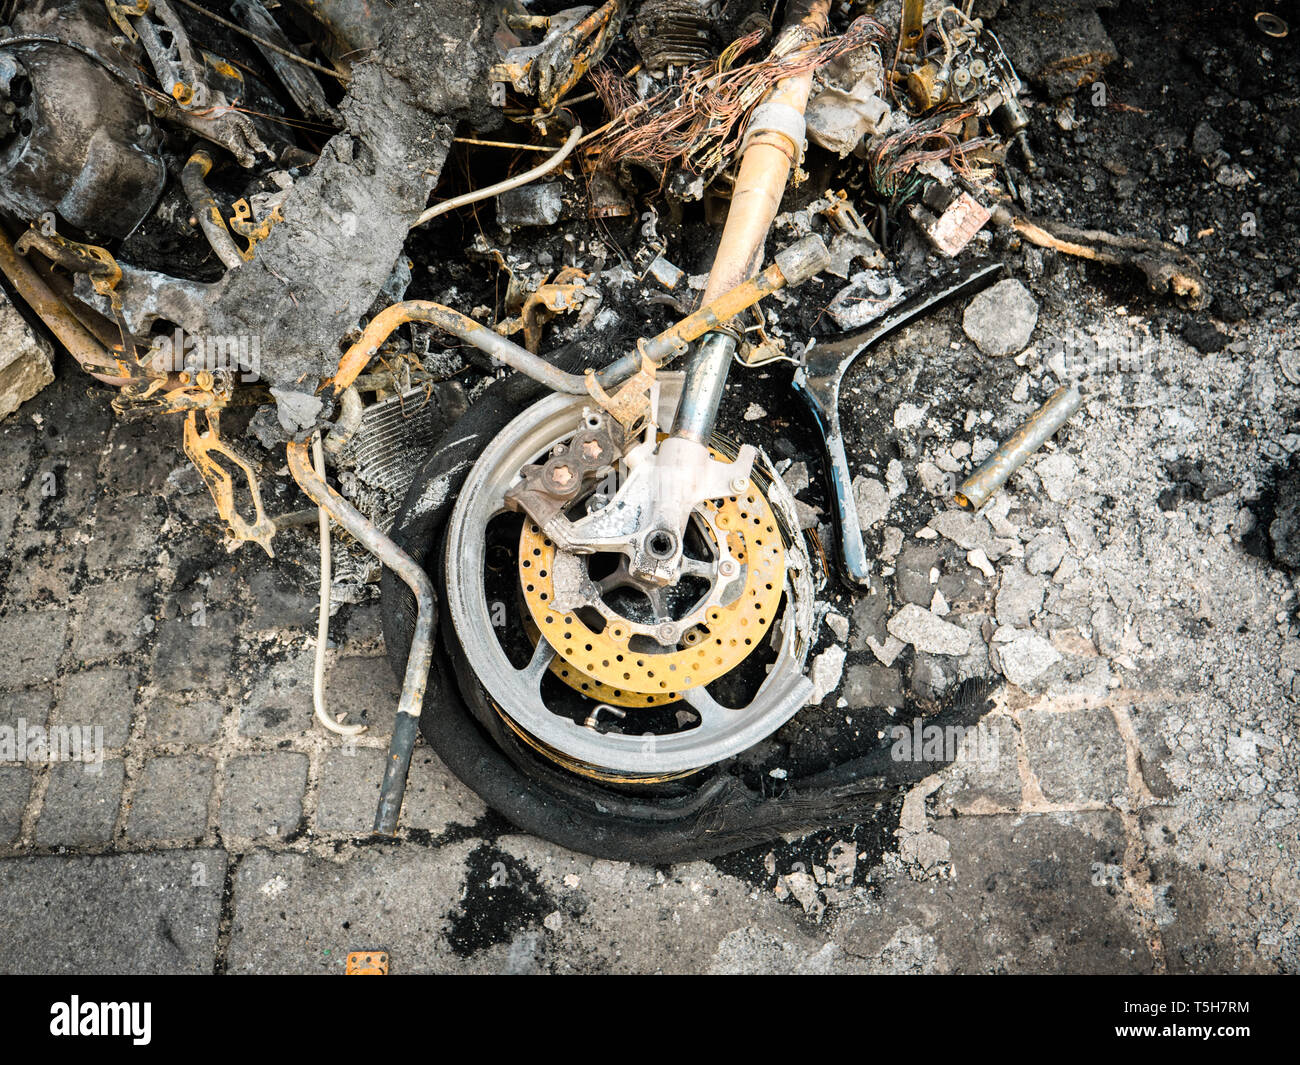 Paris, France - Mar 19, 2019: Detail of burned luxury sport